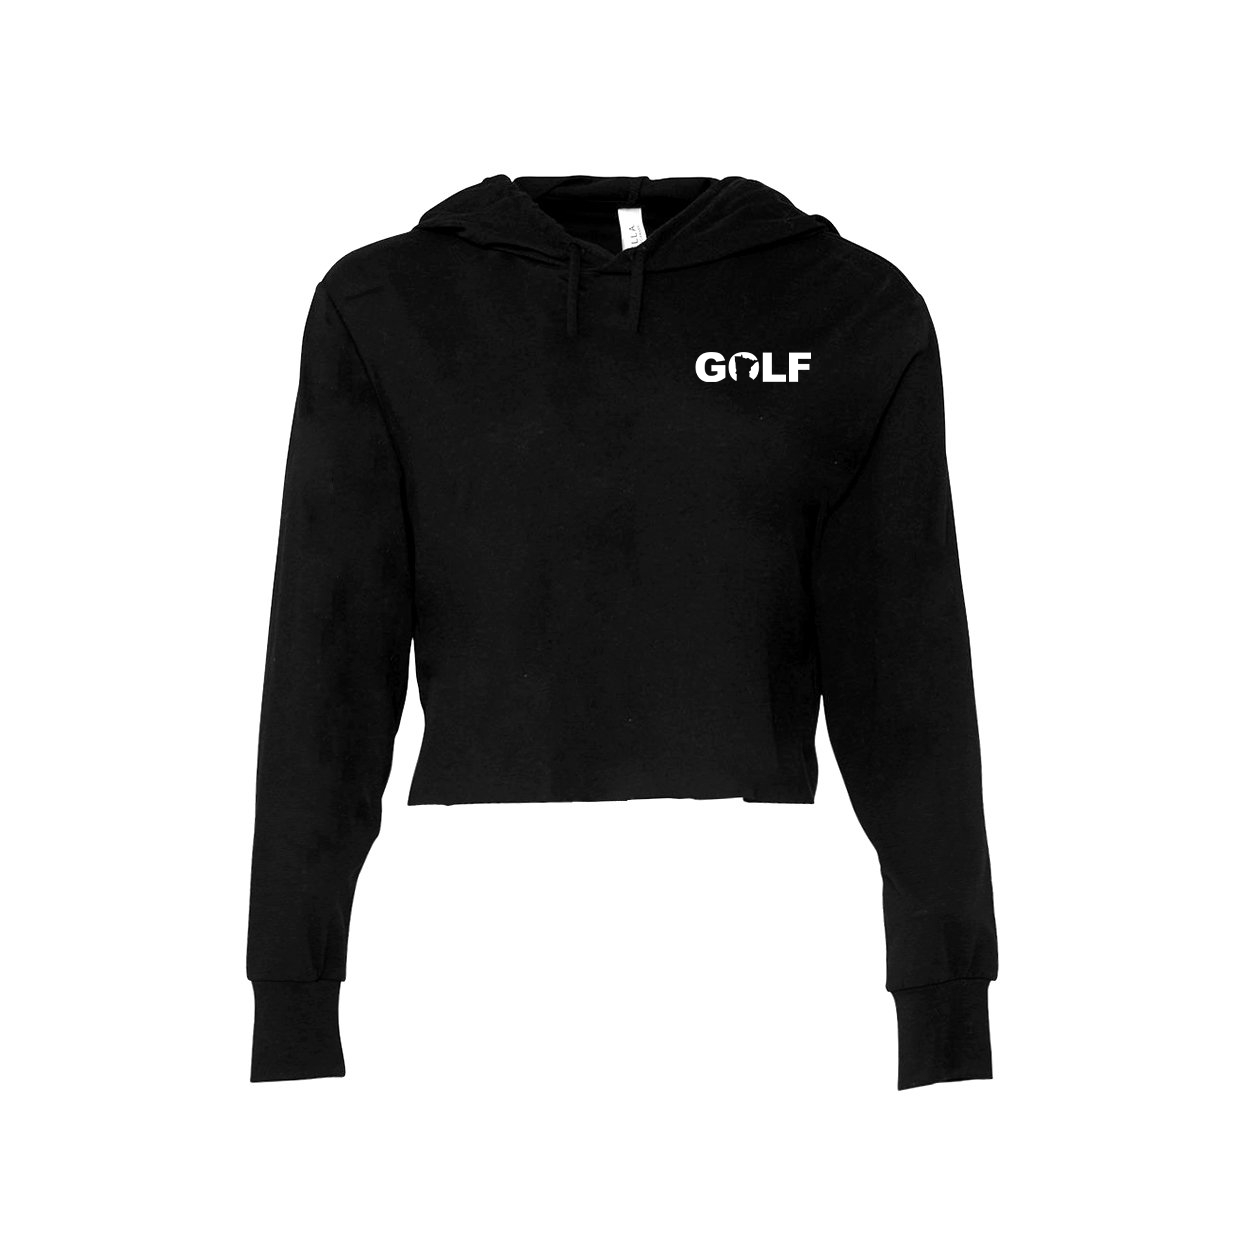 Golf Minnesota Night Out Womens Cropped Sweatshirt Black (White Logo)